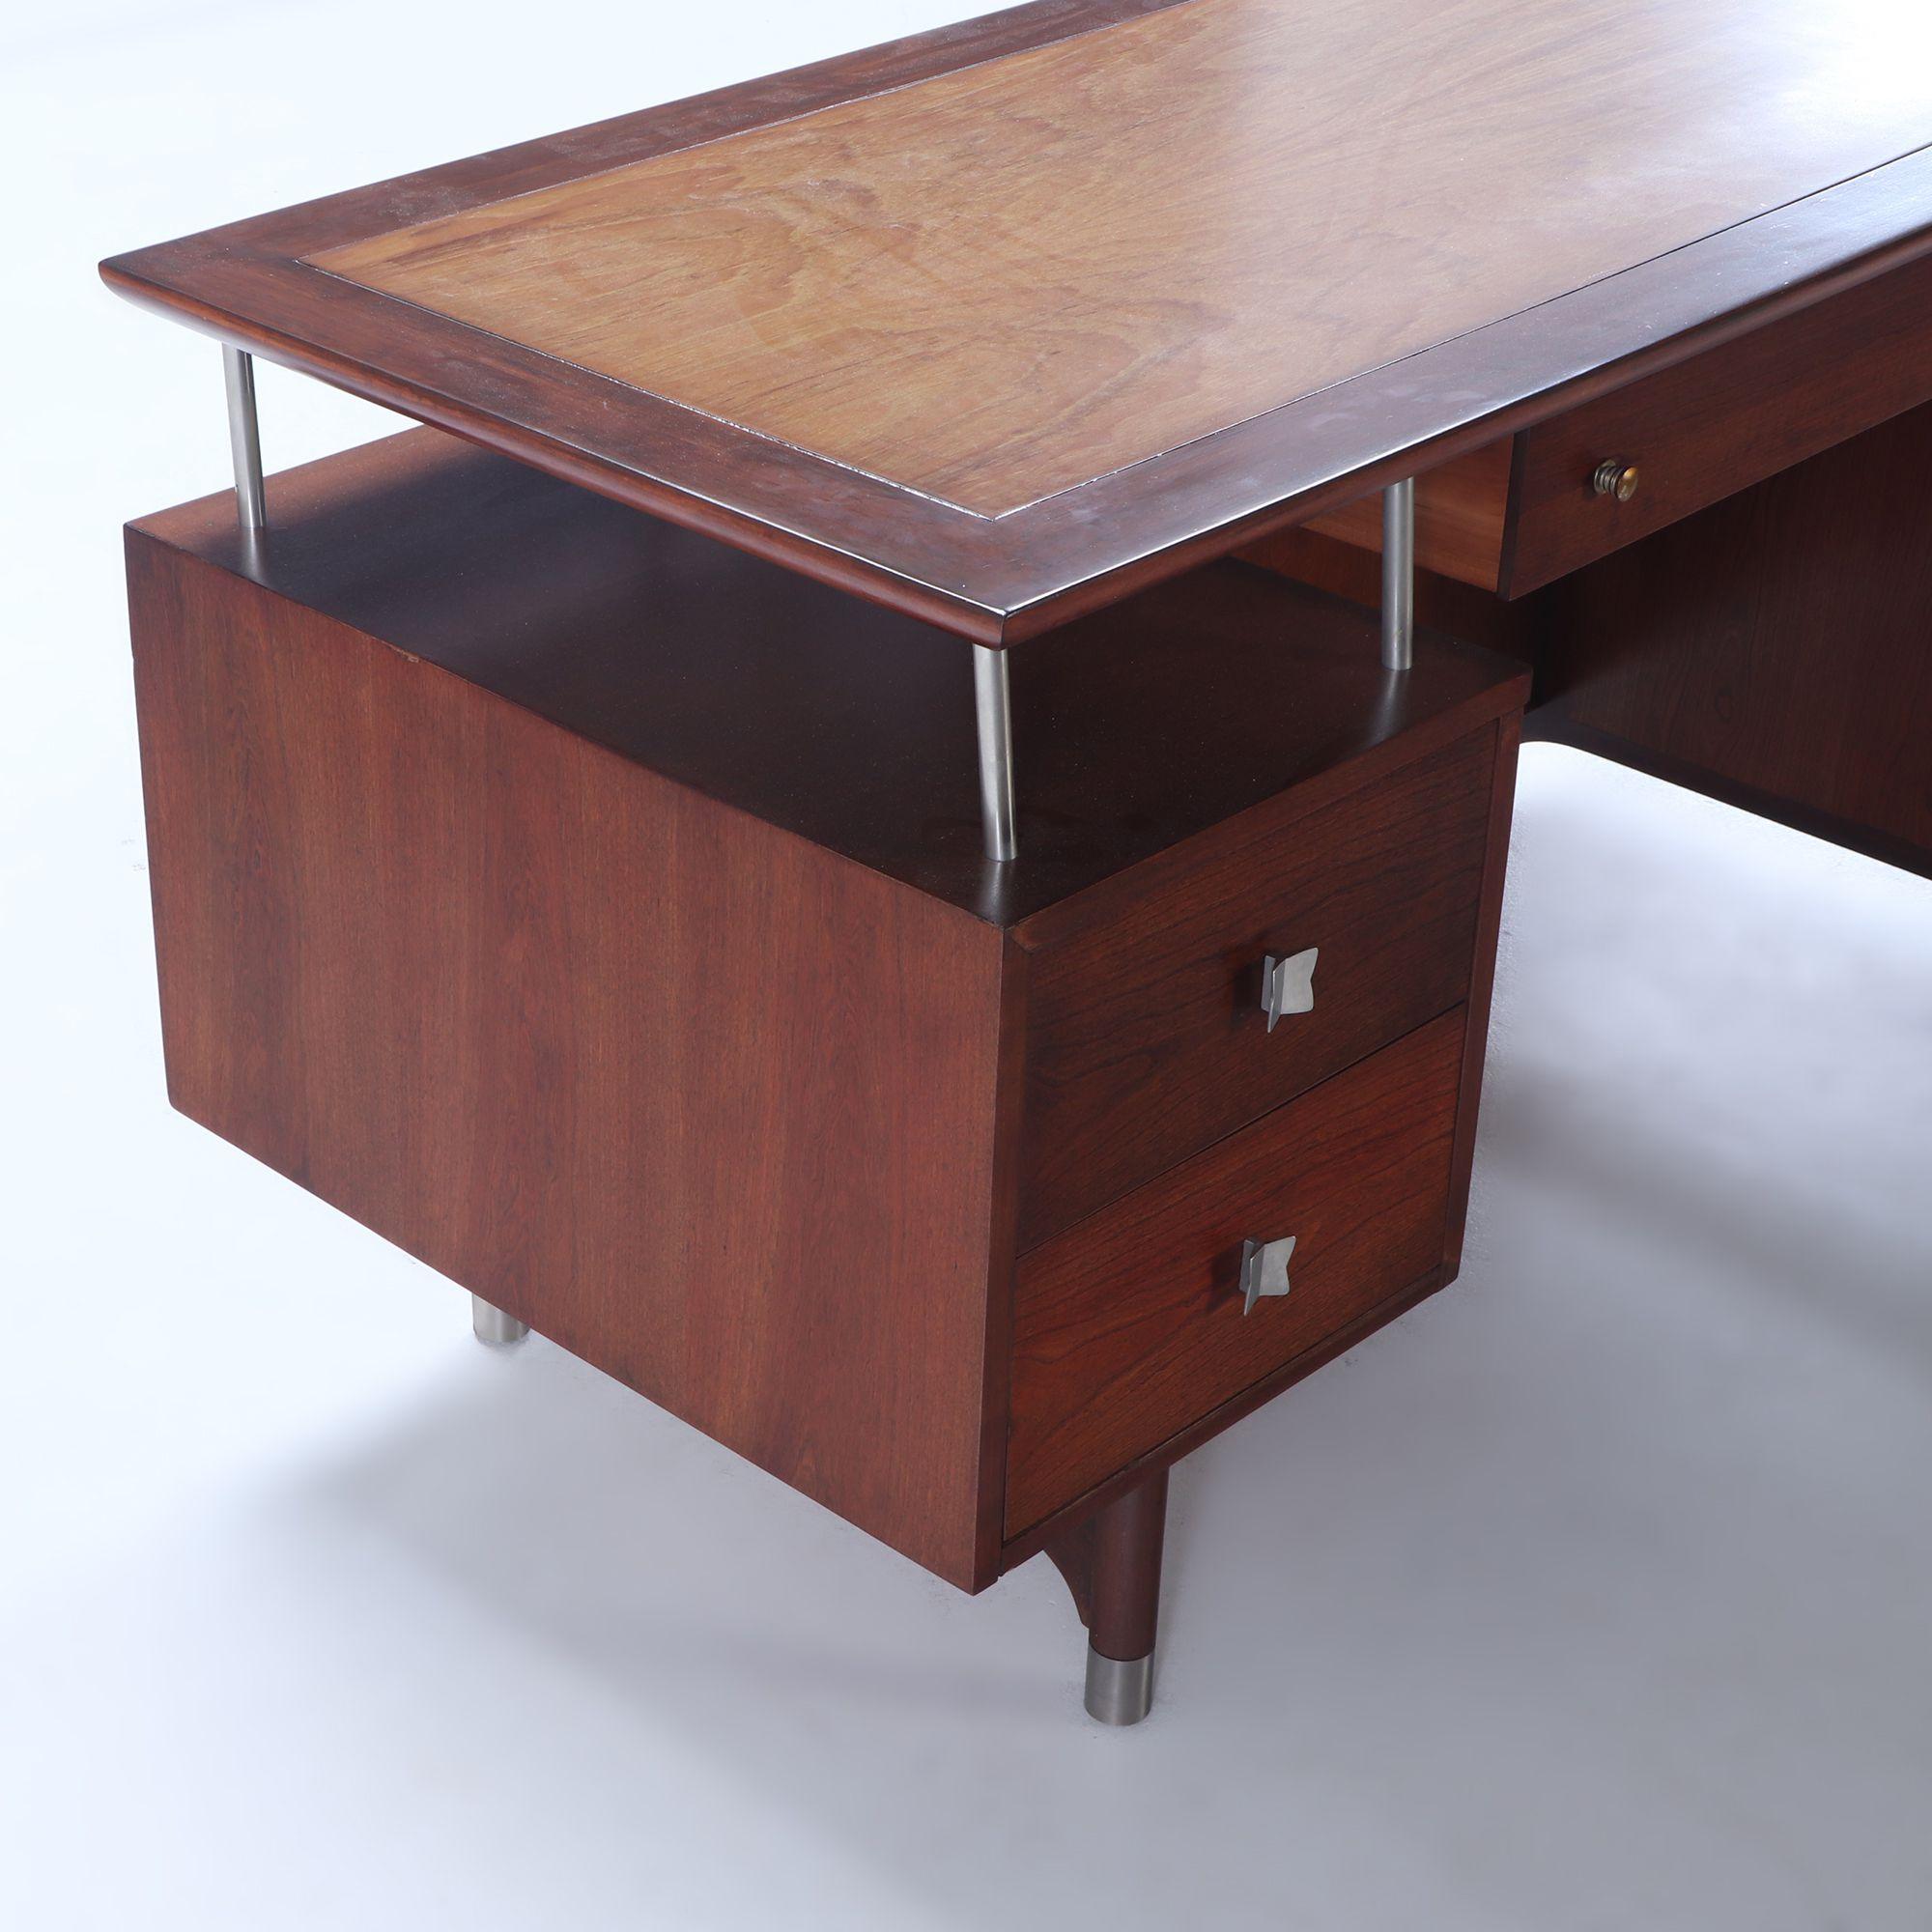 Mid-Century Modern A Jens Risom mid century modern, double pedestal executive desk in cherry wood